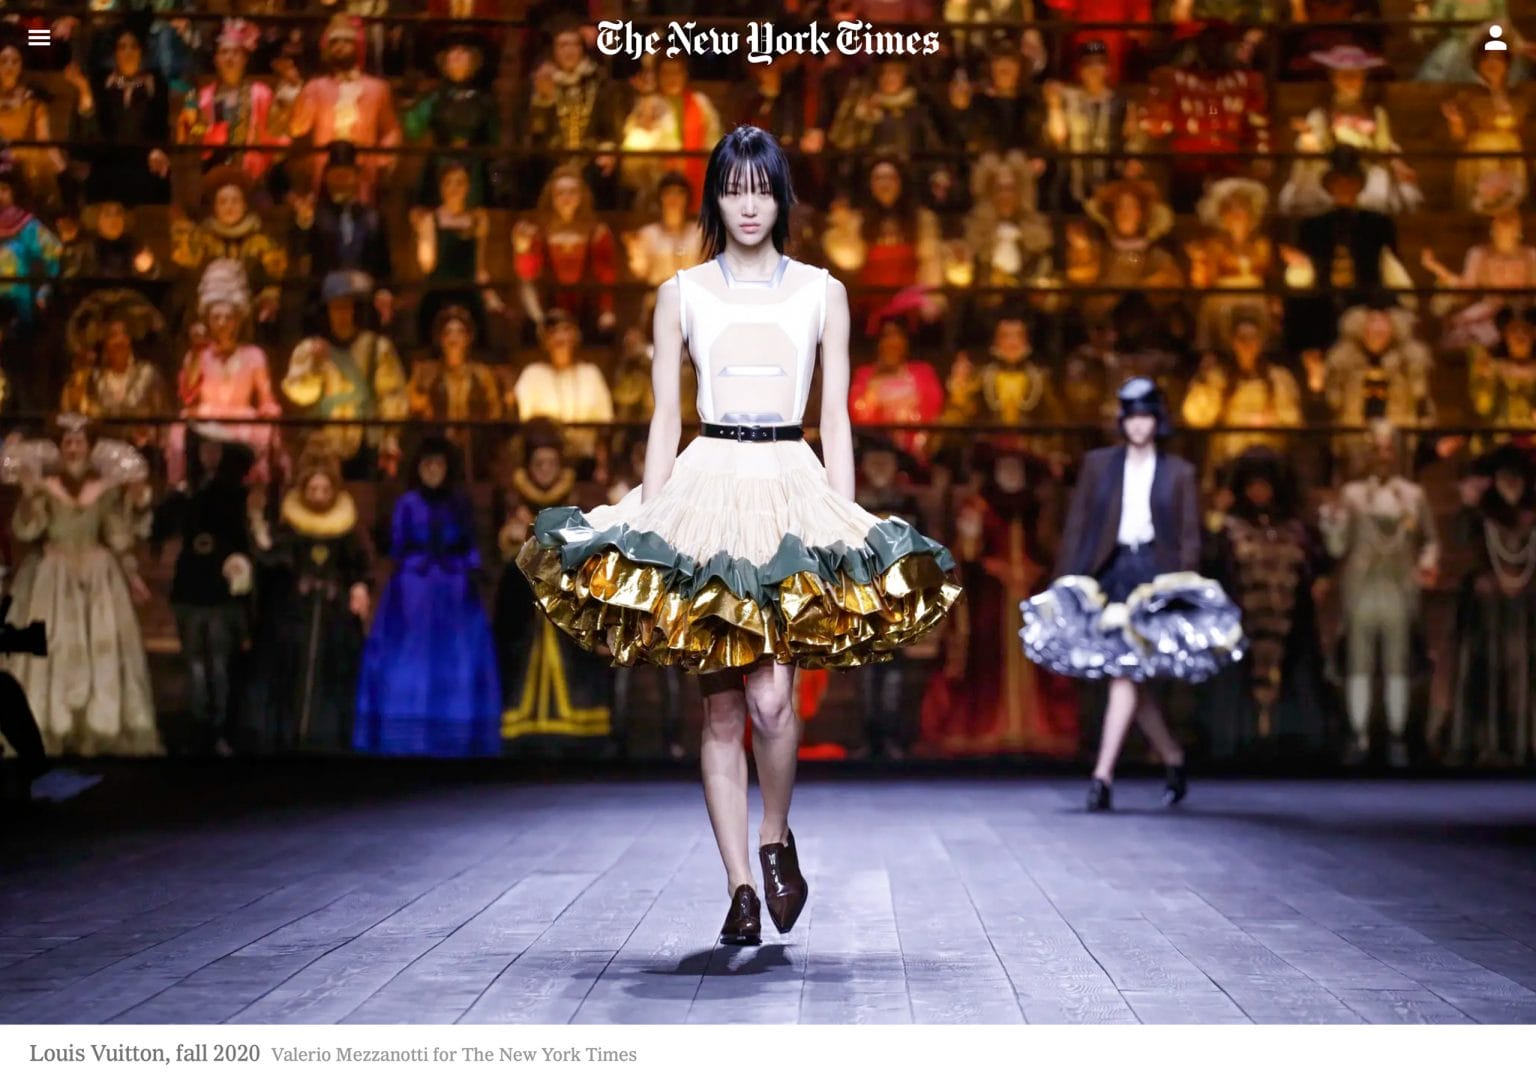 Louis Vuitton Fashion Show, Photo By Valerio Mezzanotti For The New York Times